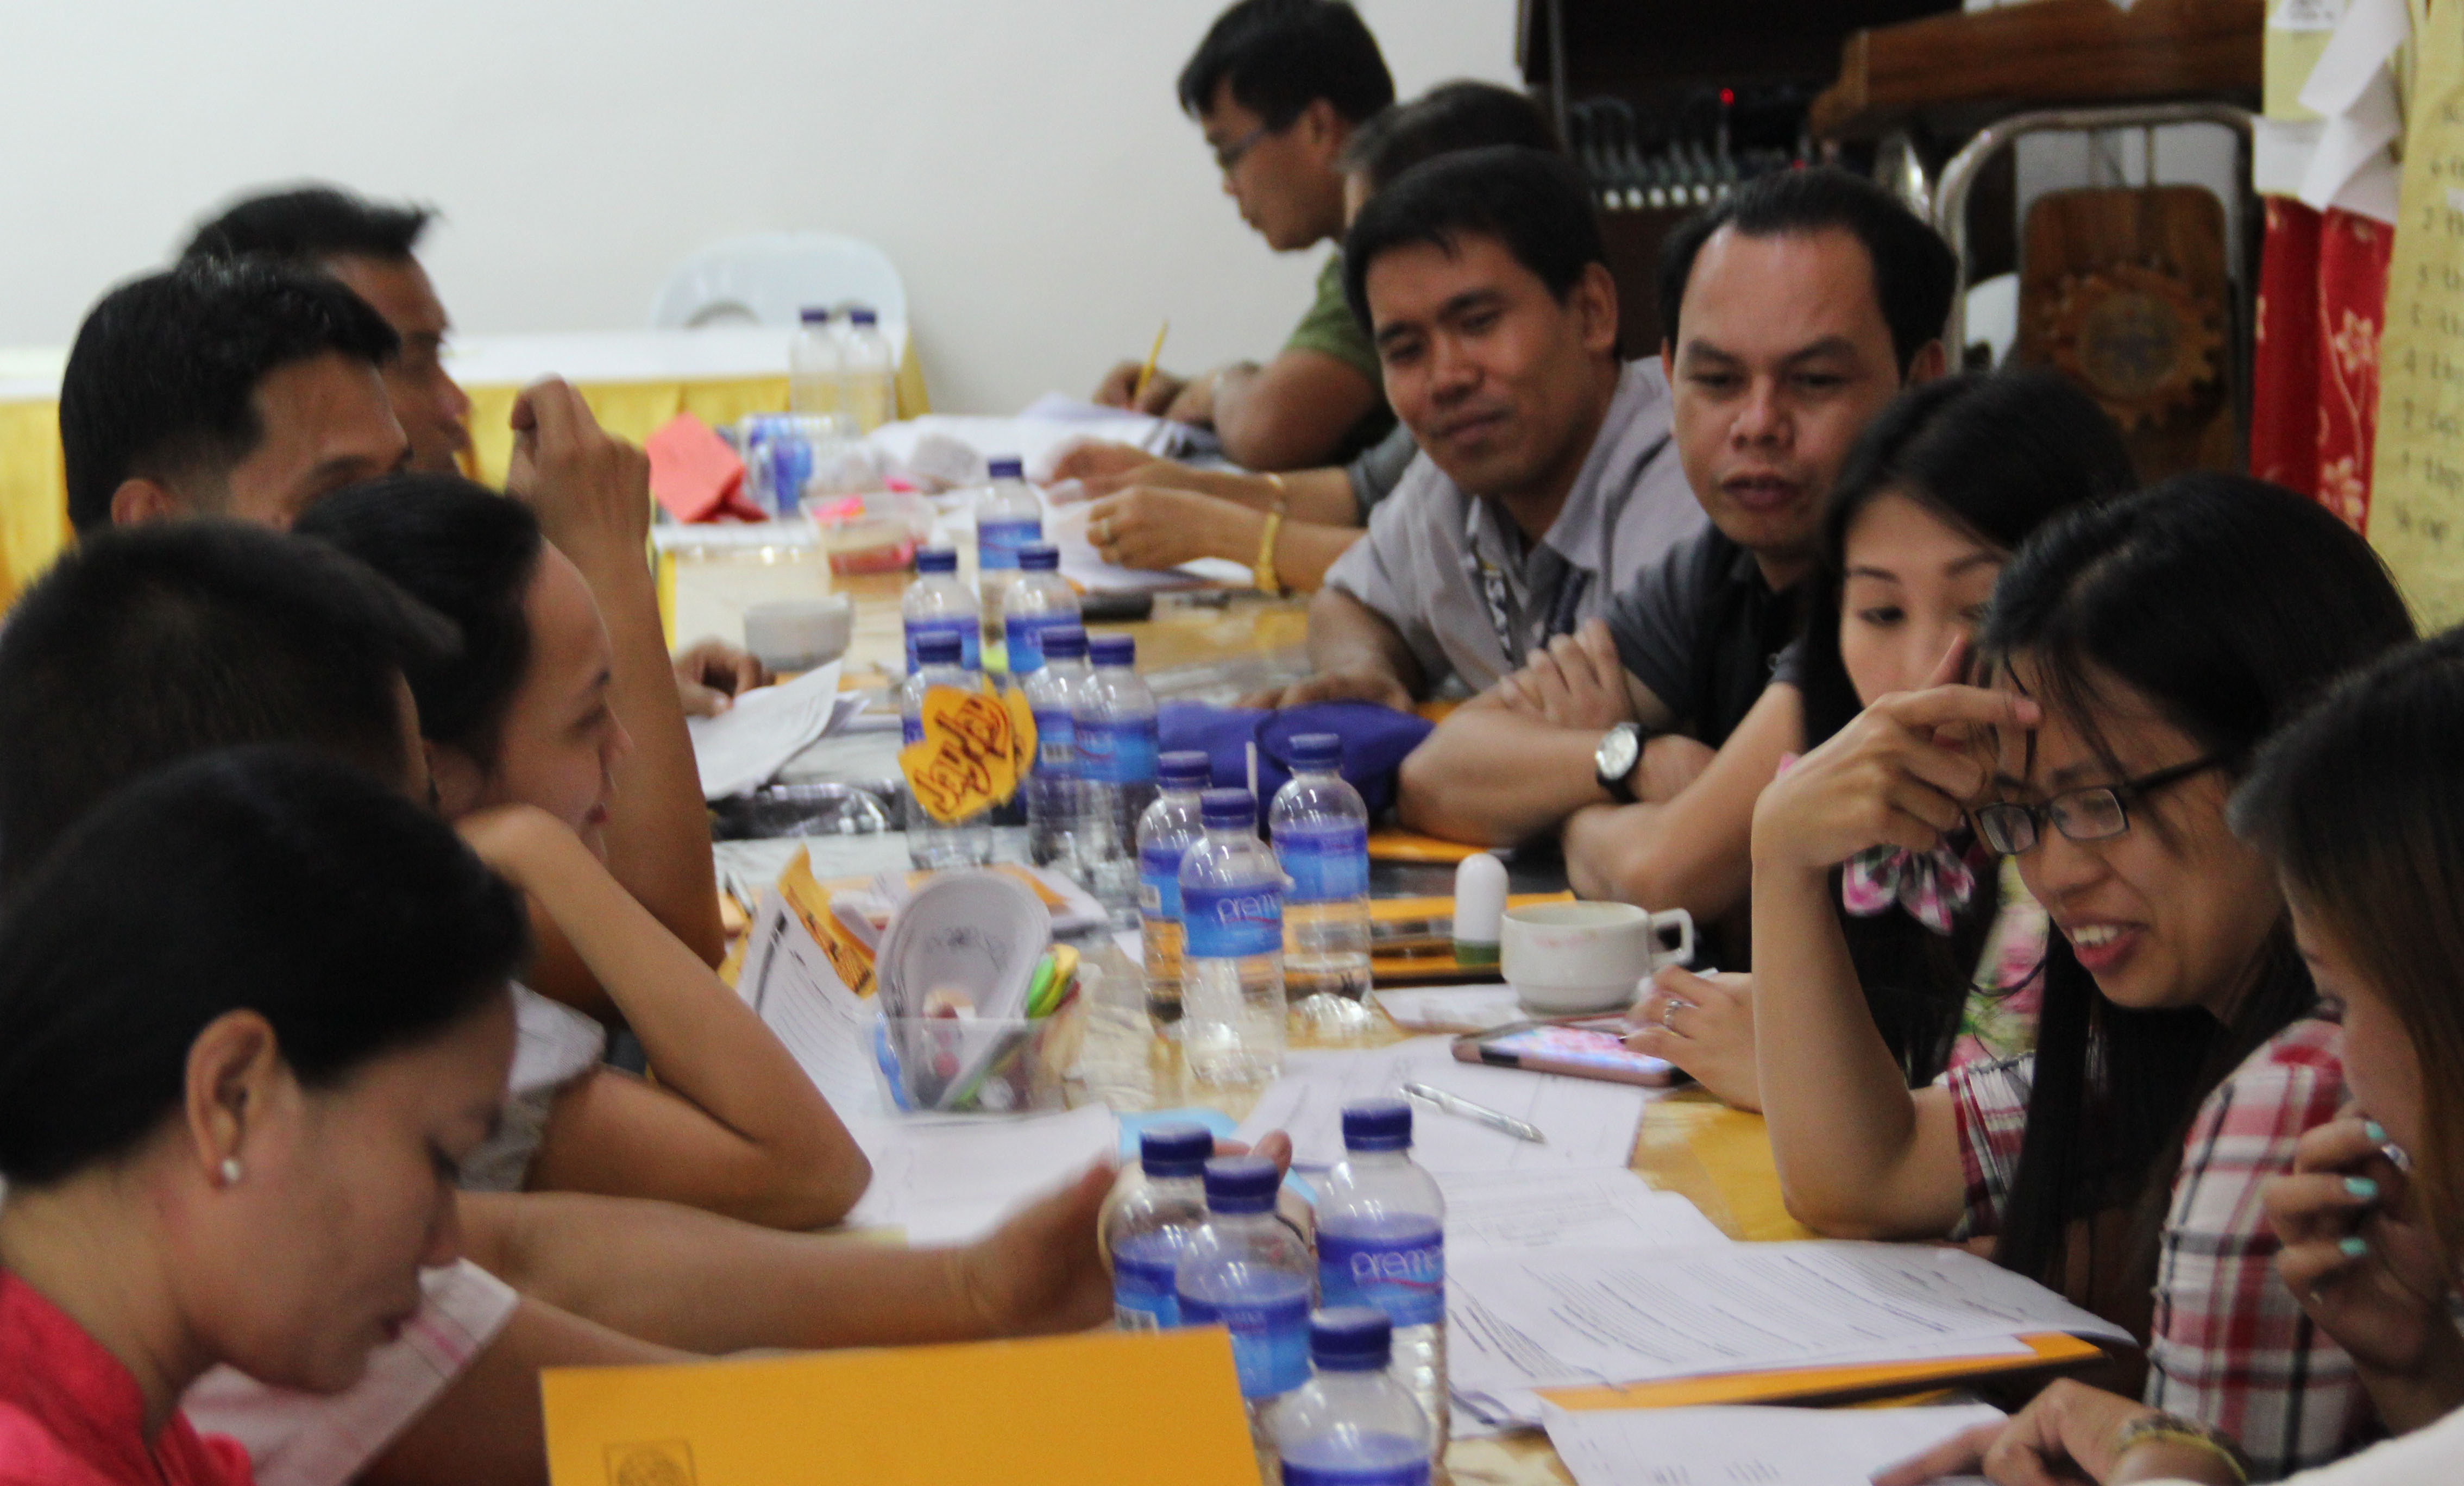 ISAT U Instructors in the planning workshop.